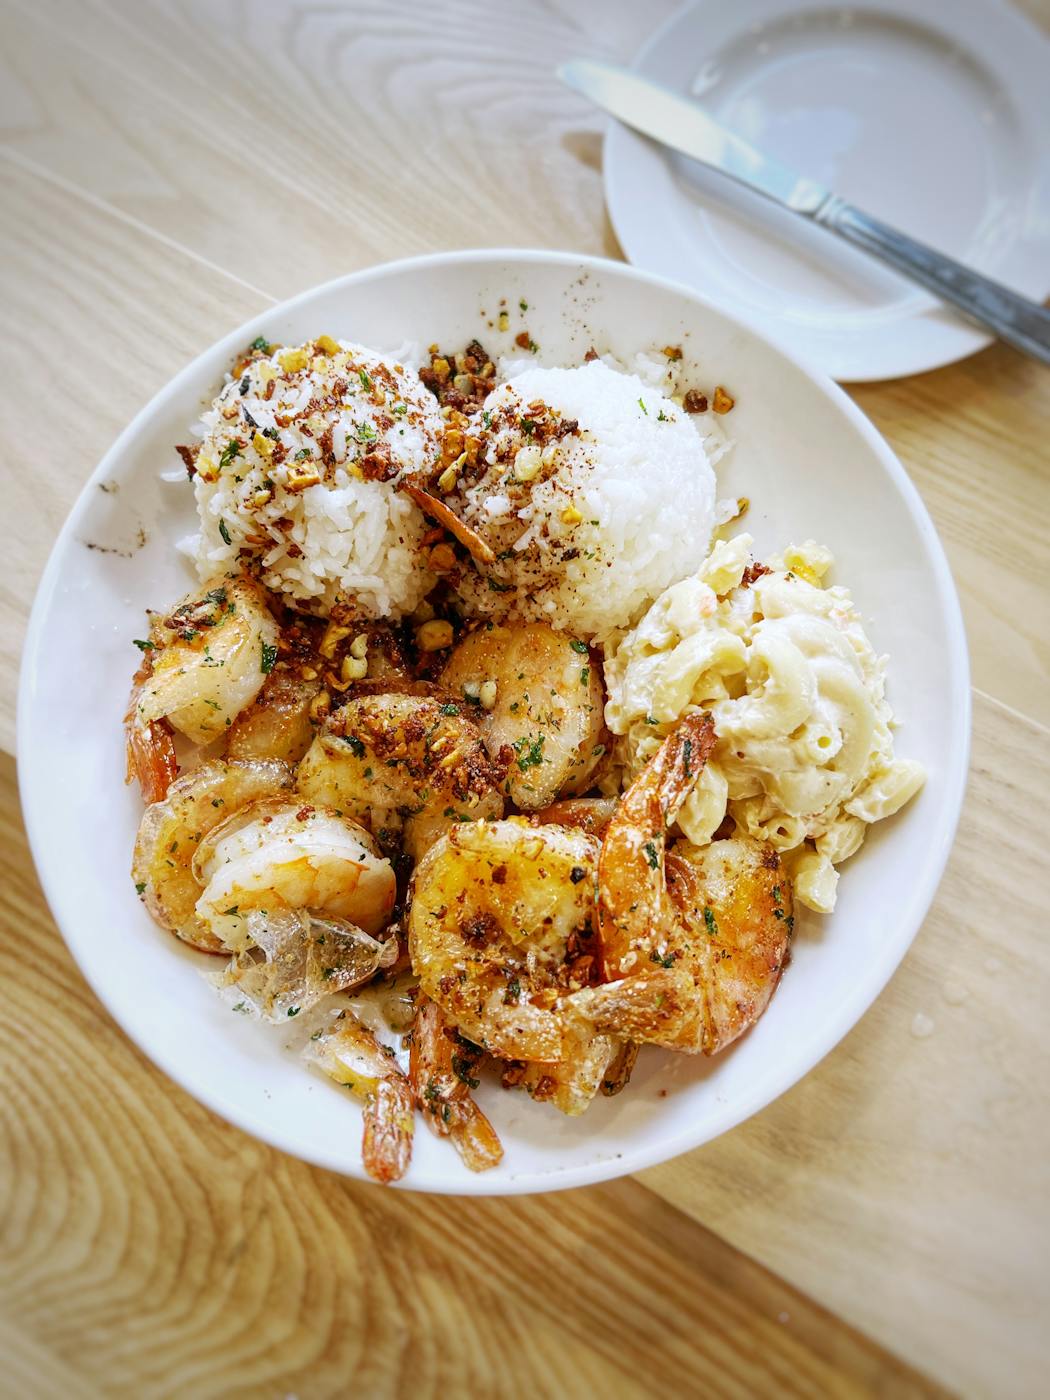 Kahuku-style garlic shrimp at Ono Hawaiian Plates.